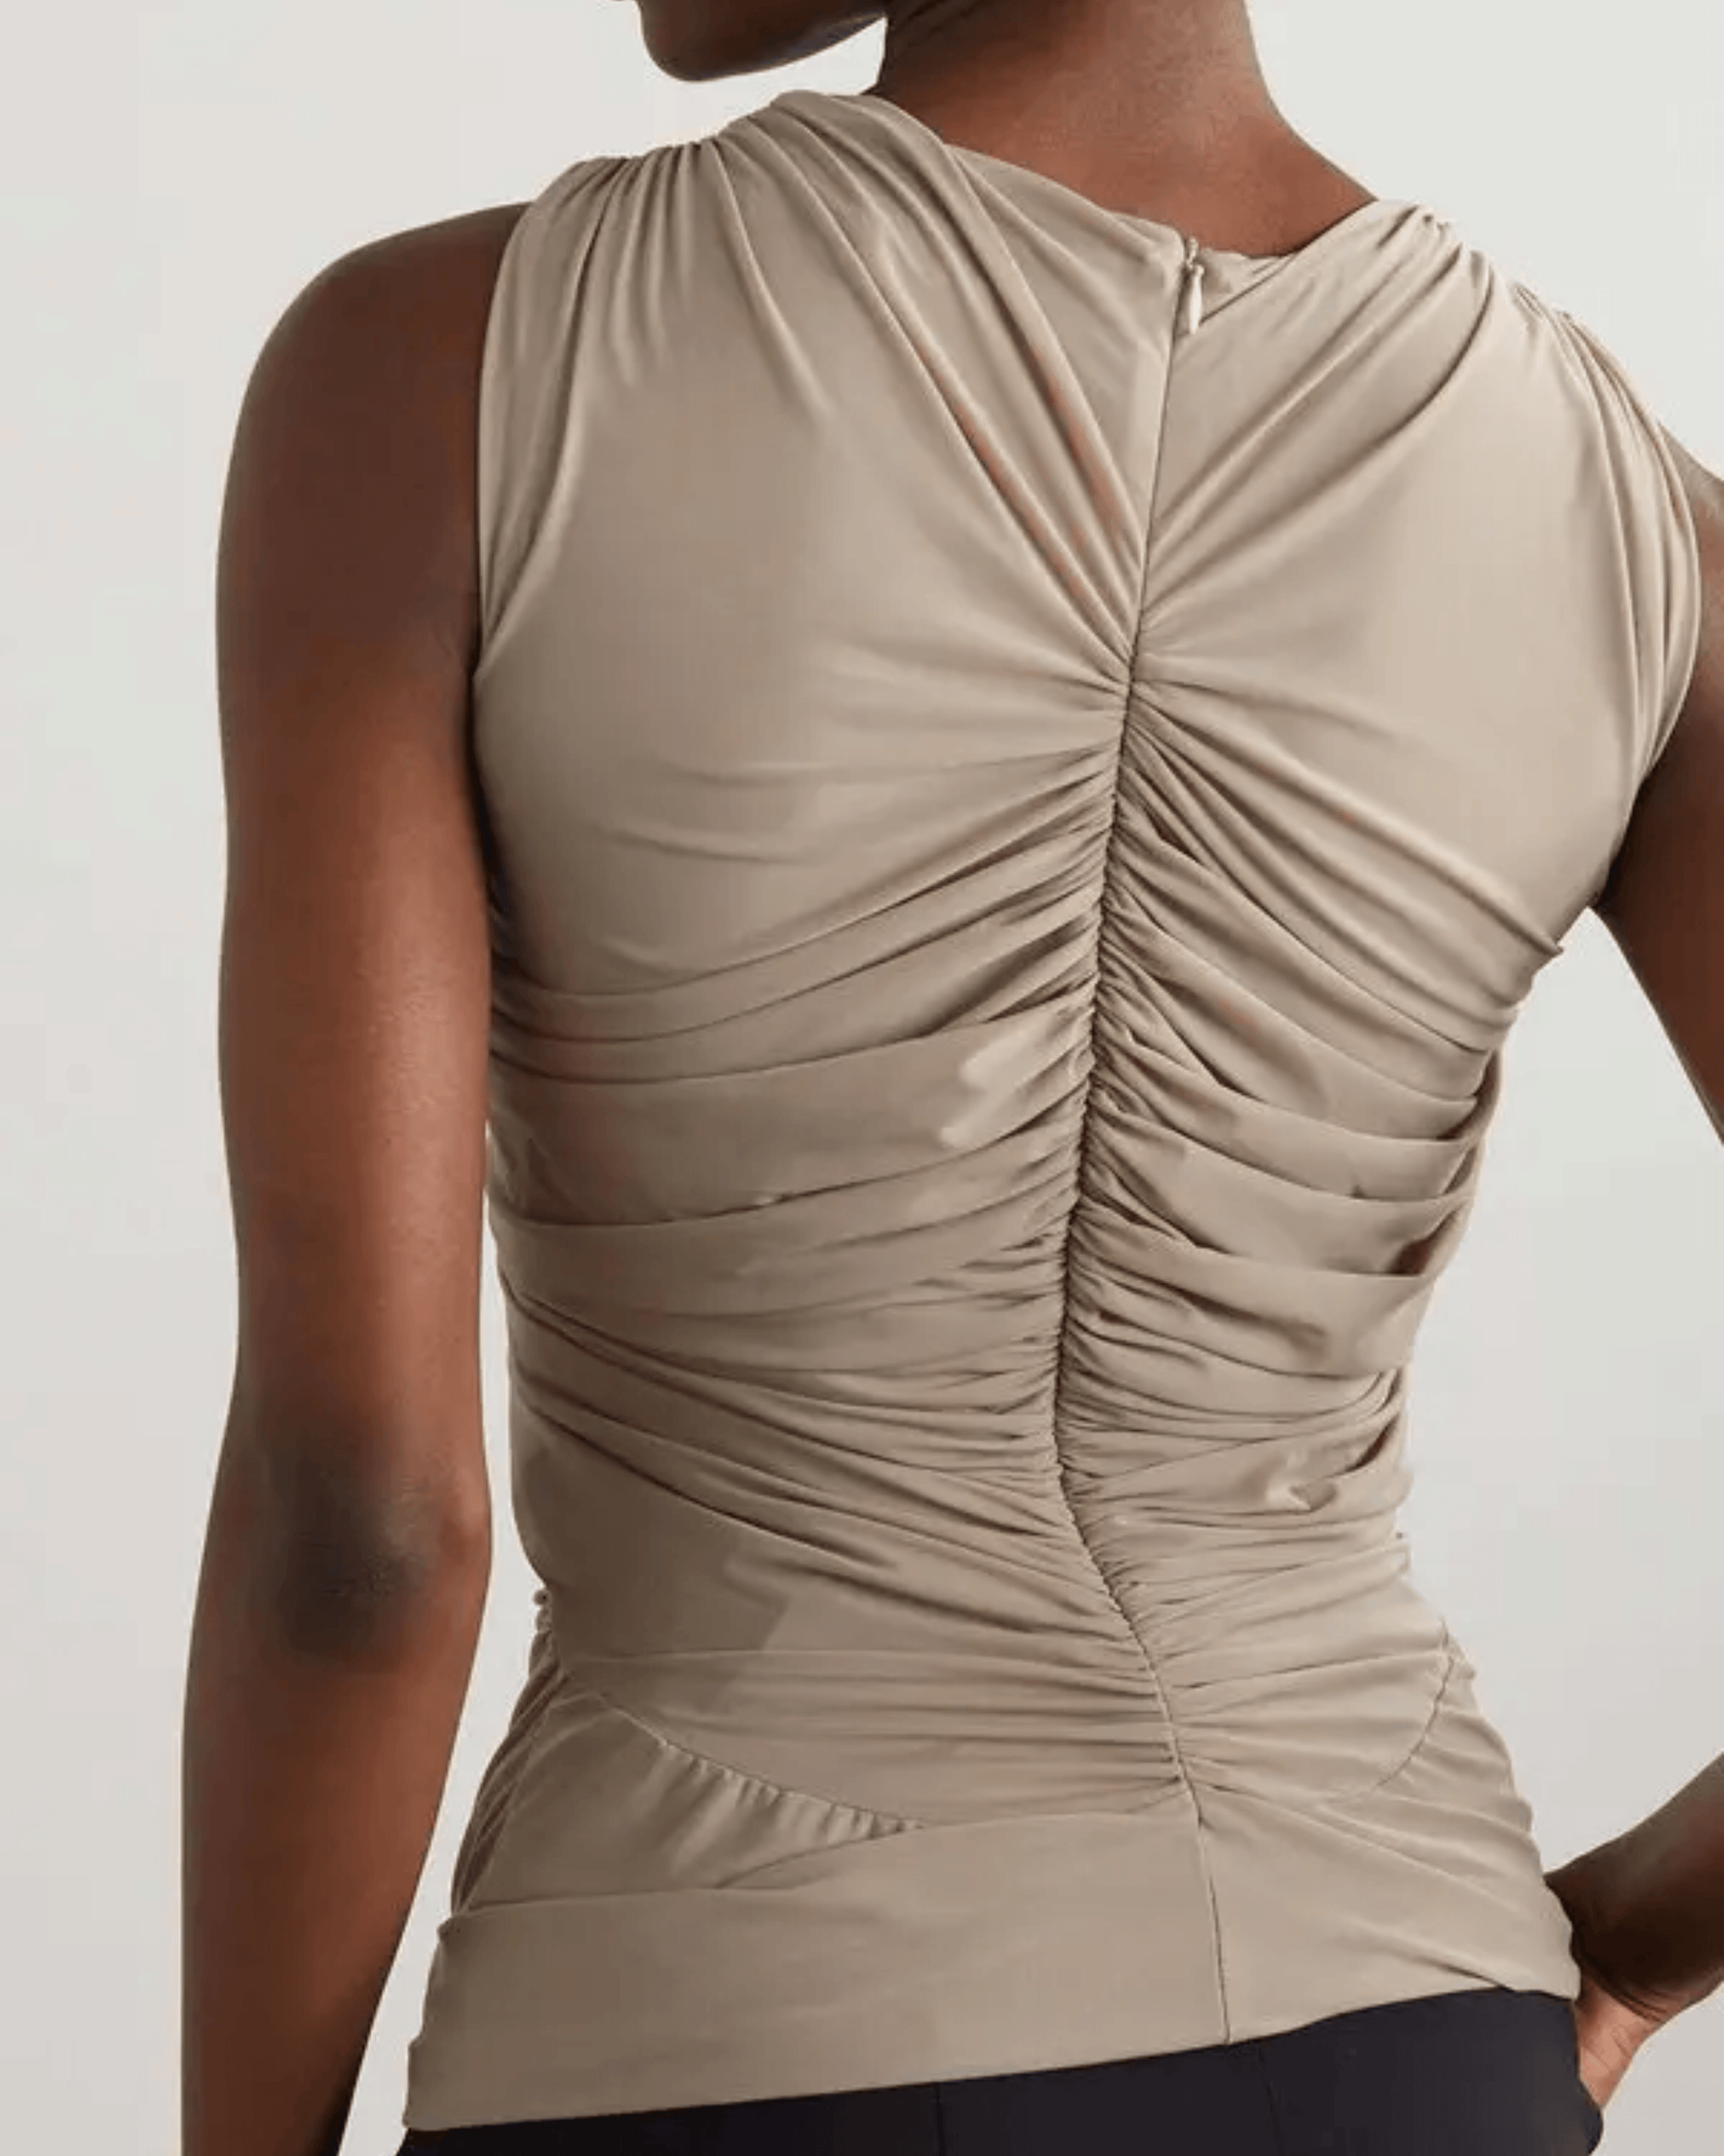 Venus Draped Cutout Stretch Jersey Top - Endless